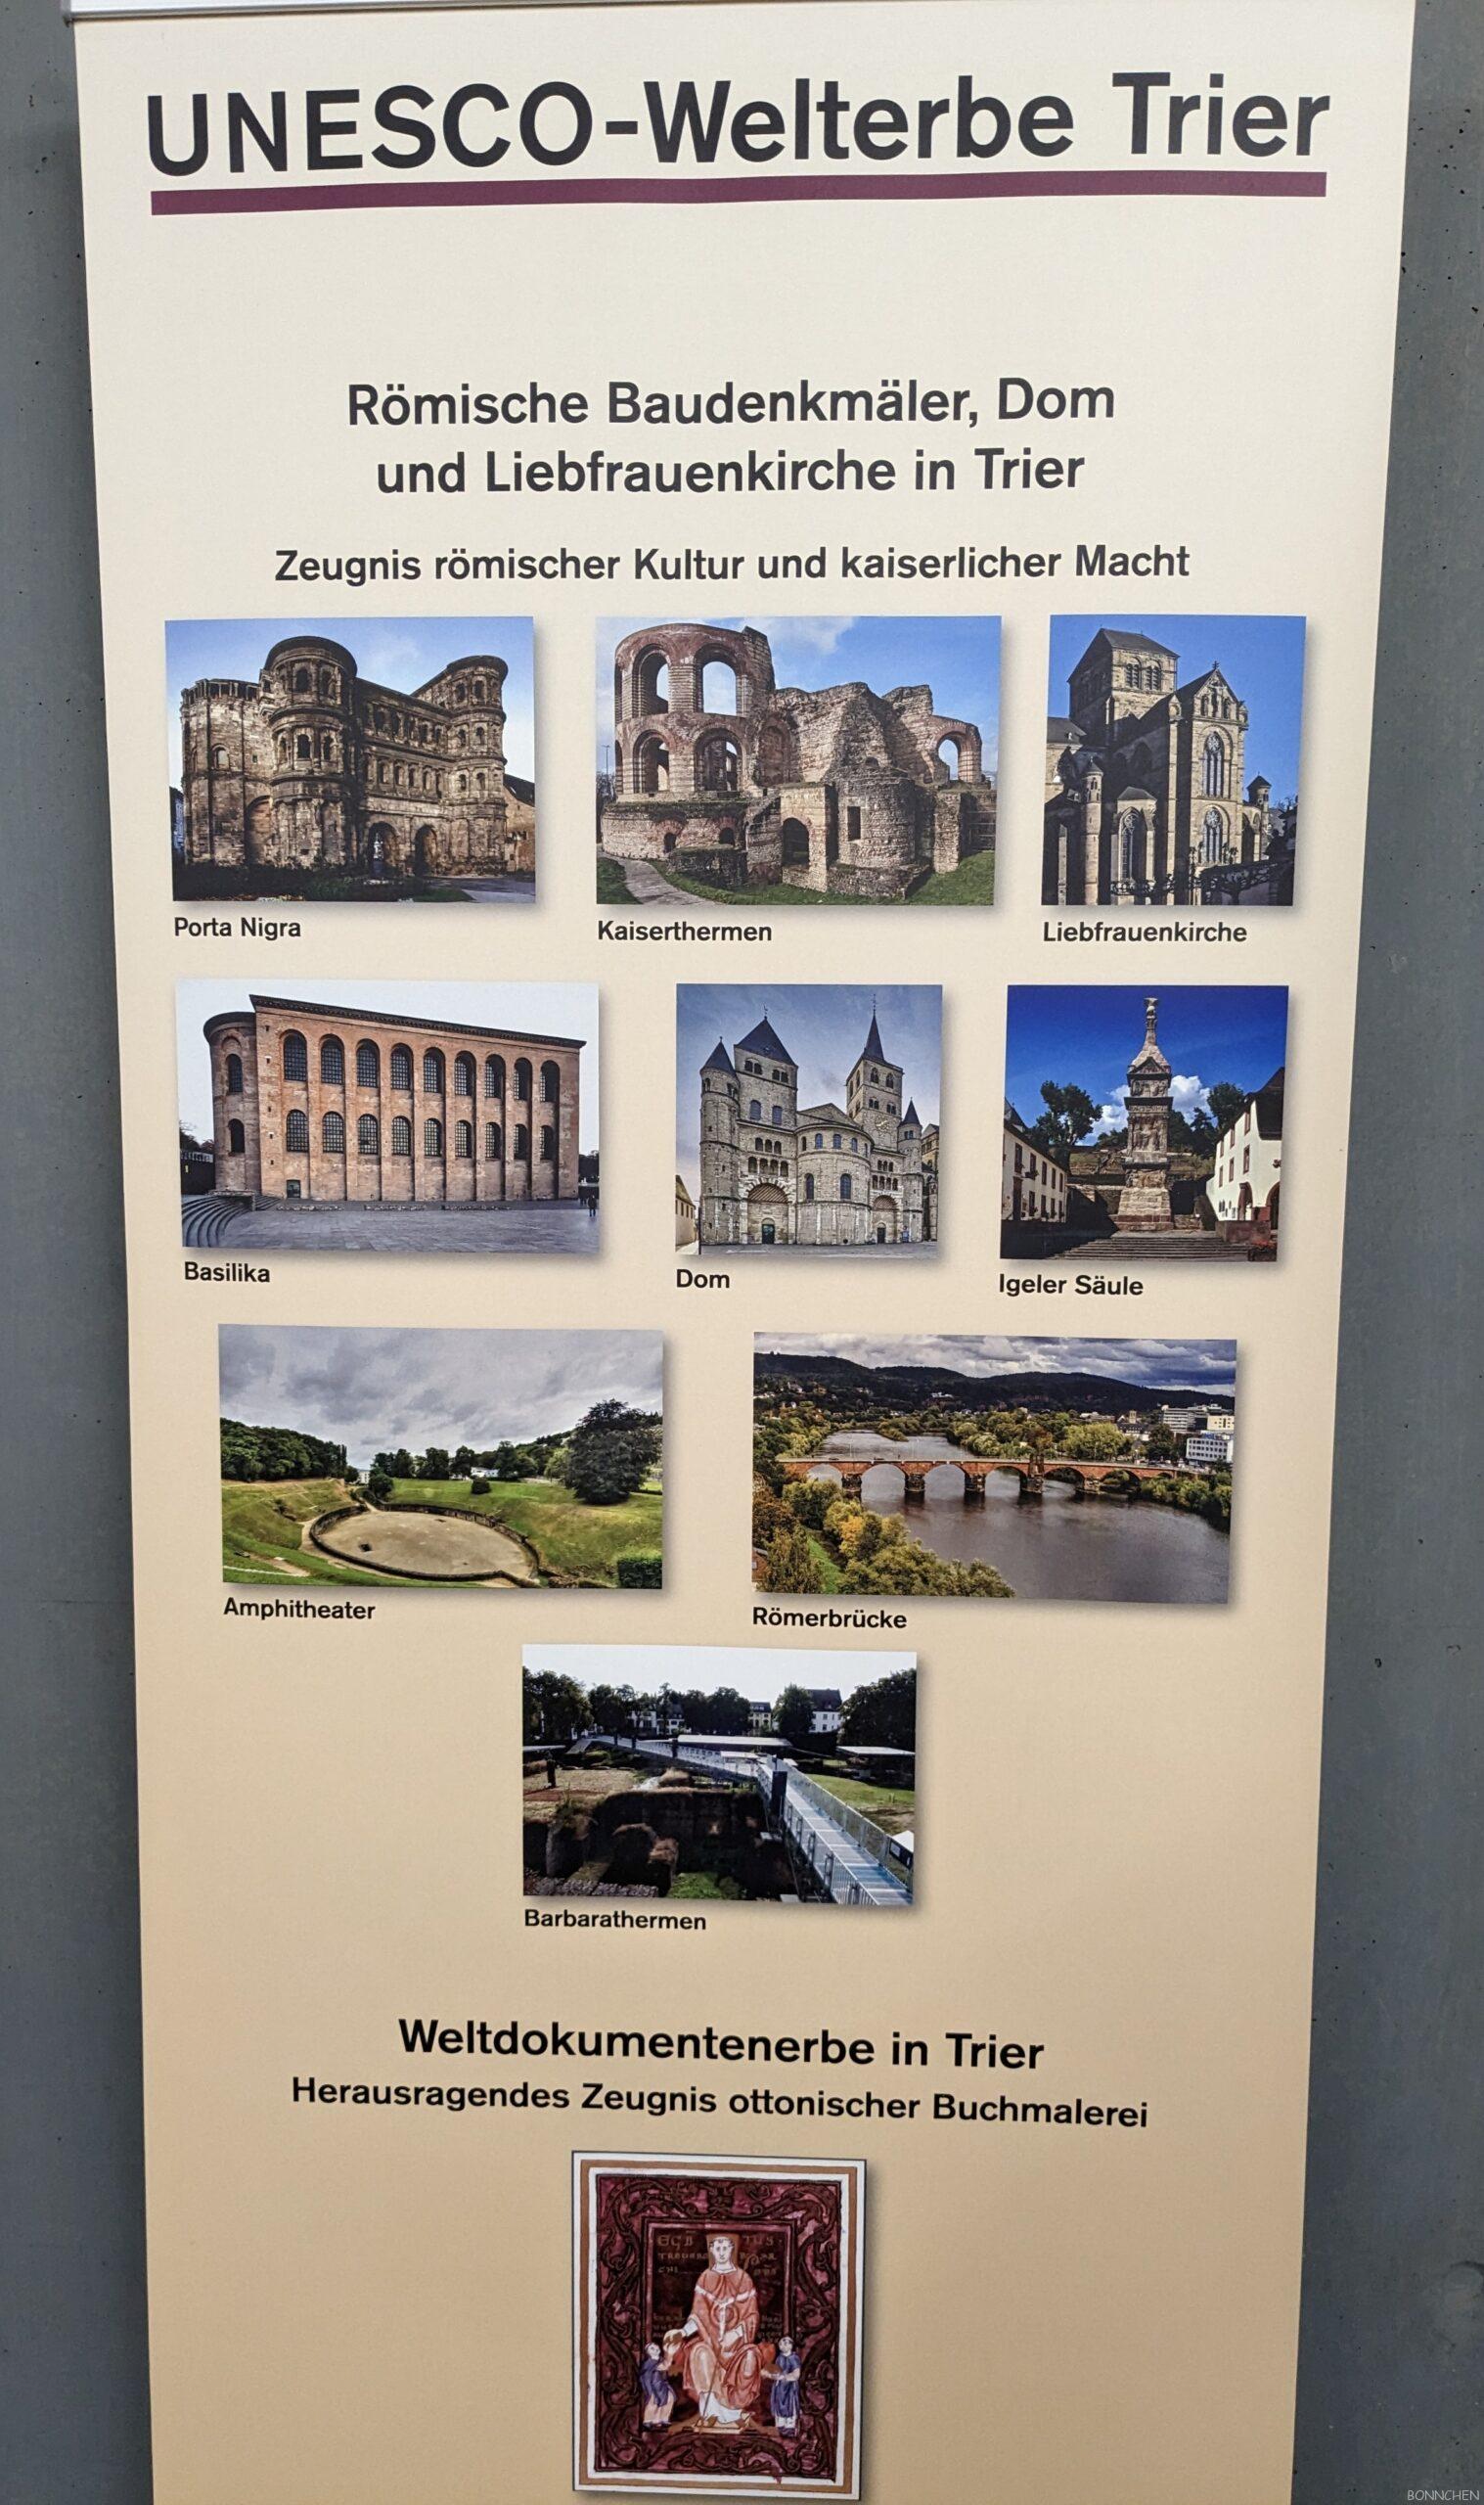 Seit 1986 UNESCO-Welterbe Trier: Amphitheater, Barbarathermen, Kaiserthermen, Konstantinbasilika, Porta Nigra, Römerbrücke, Trierer Dom, Liebfrauenkirche